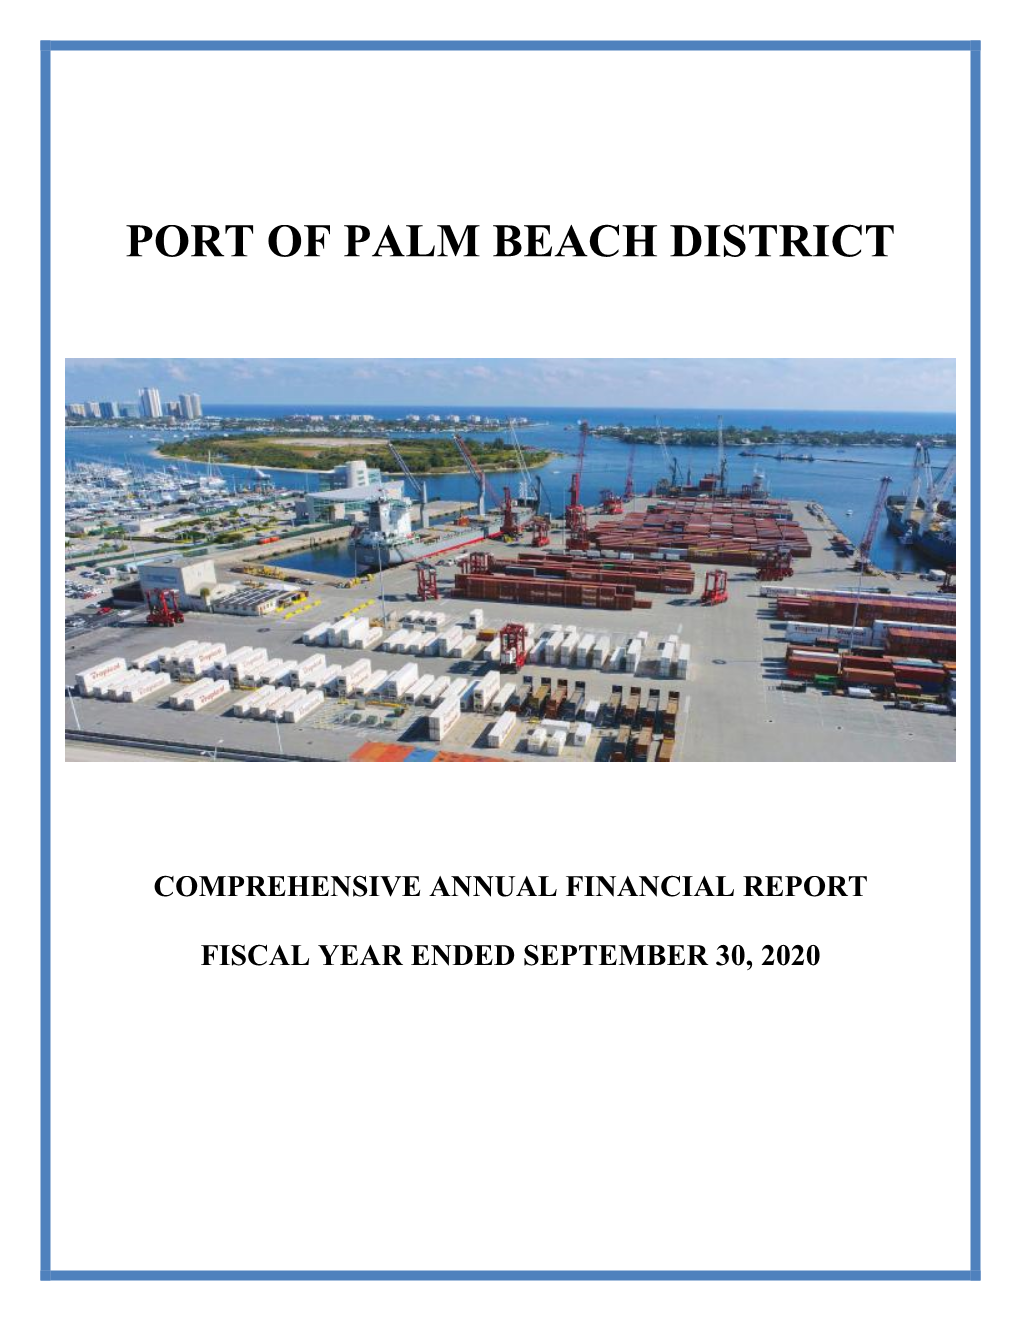 Port of Palm Beach District